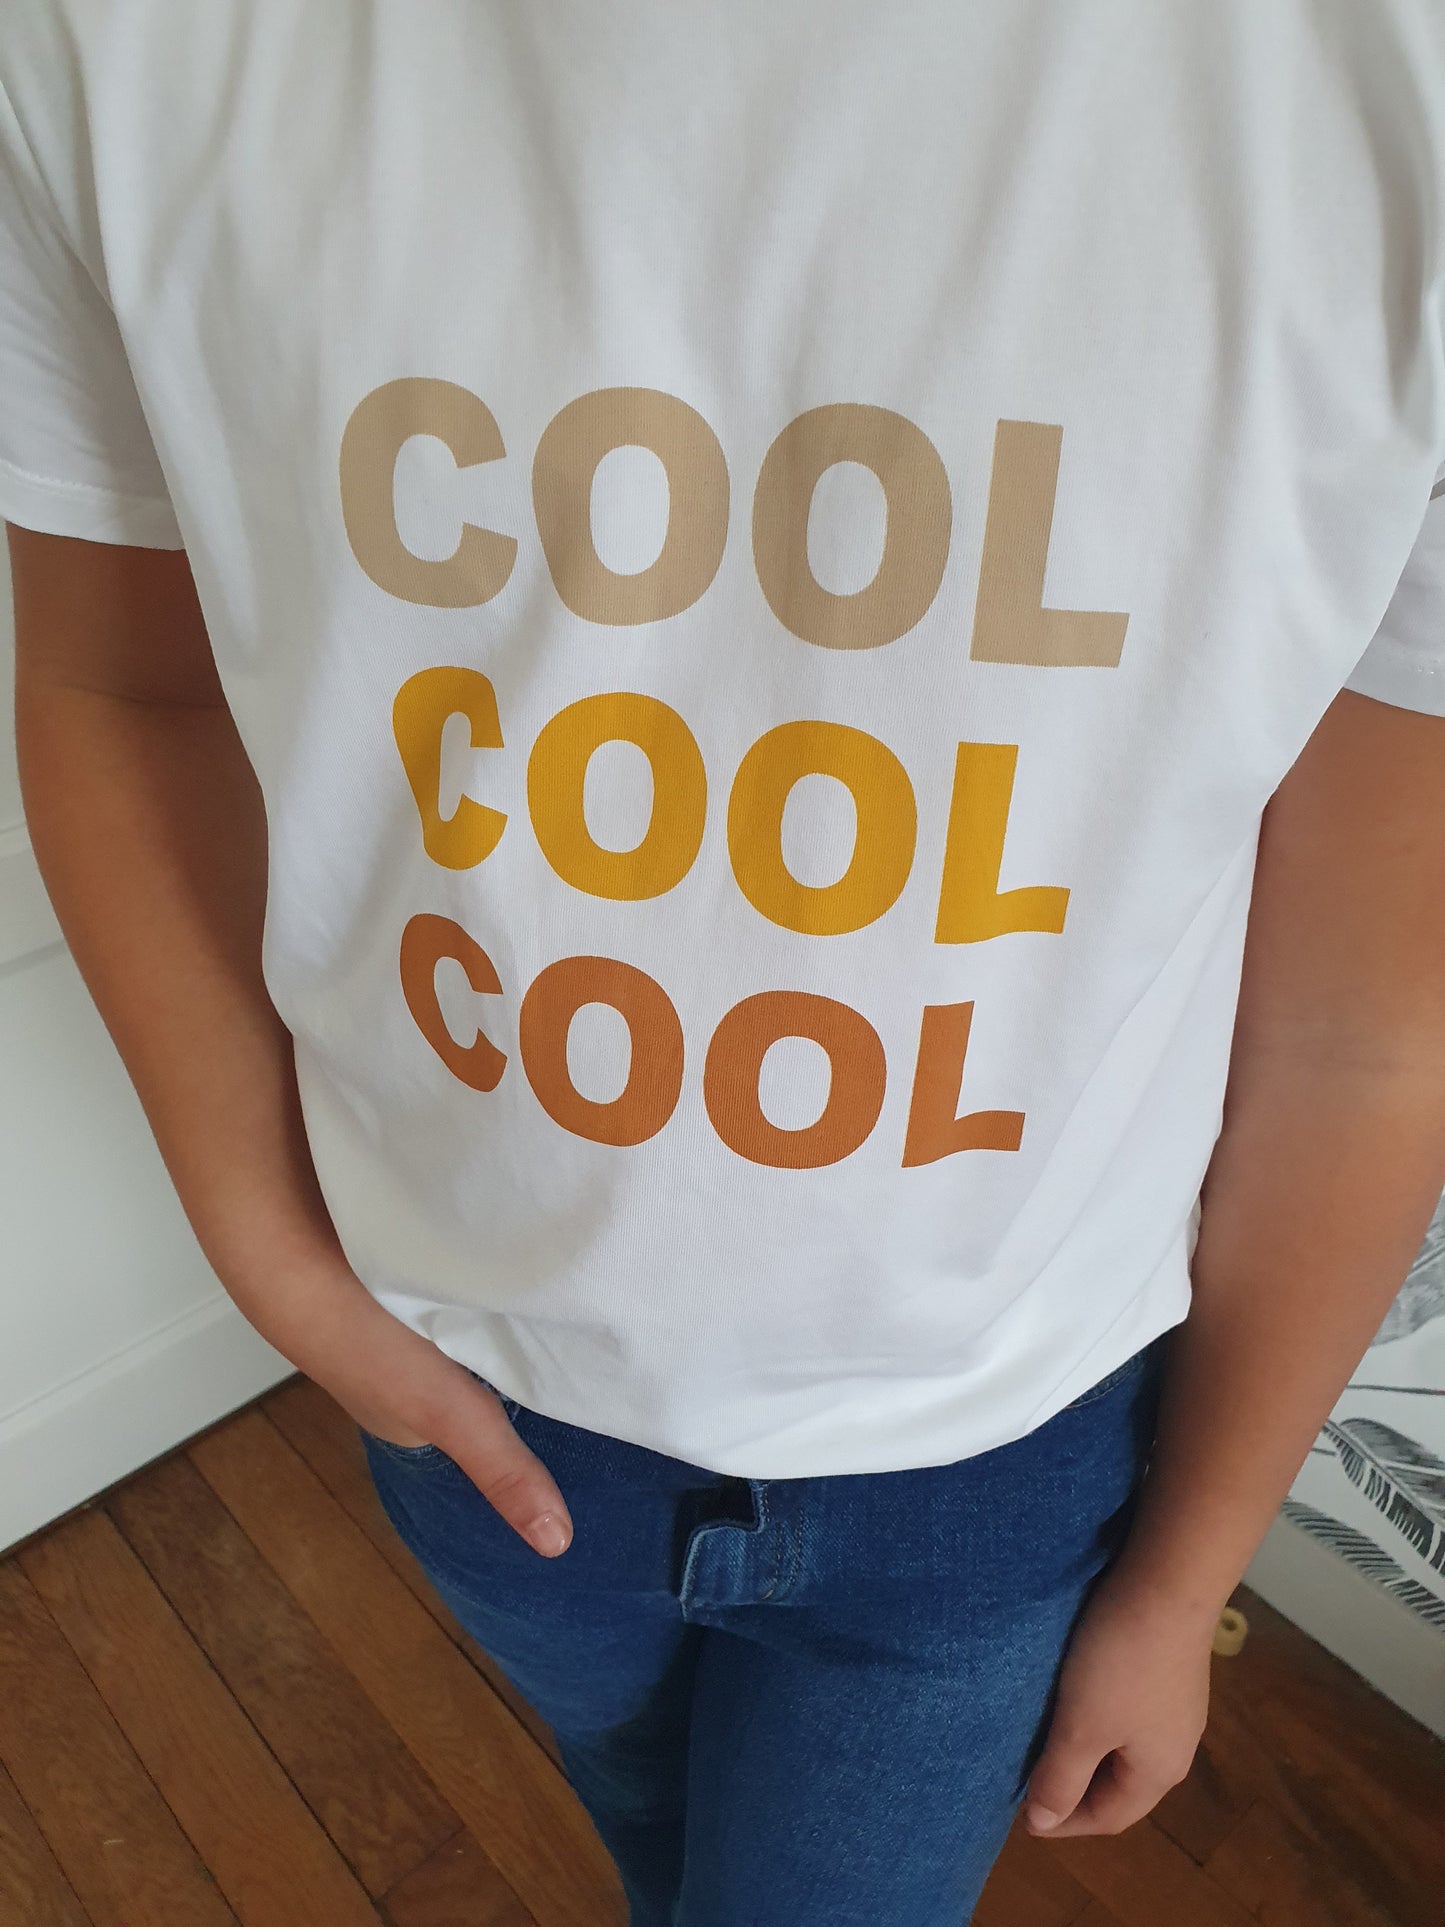 T-shirt COOL